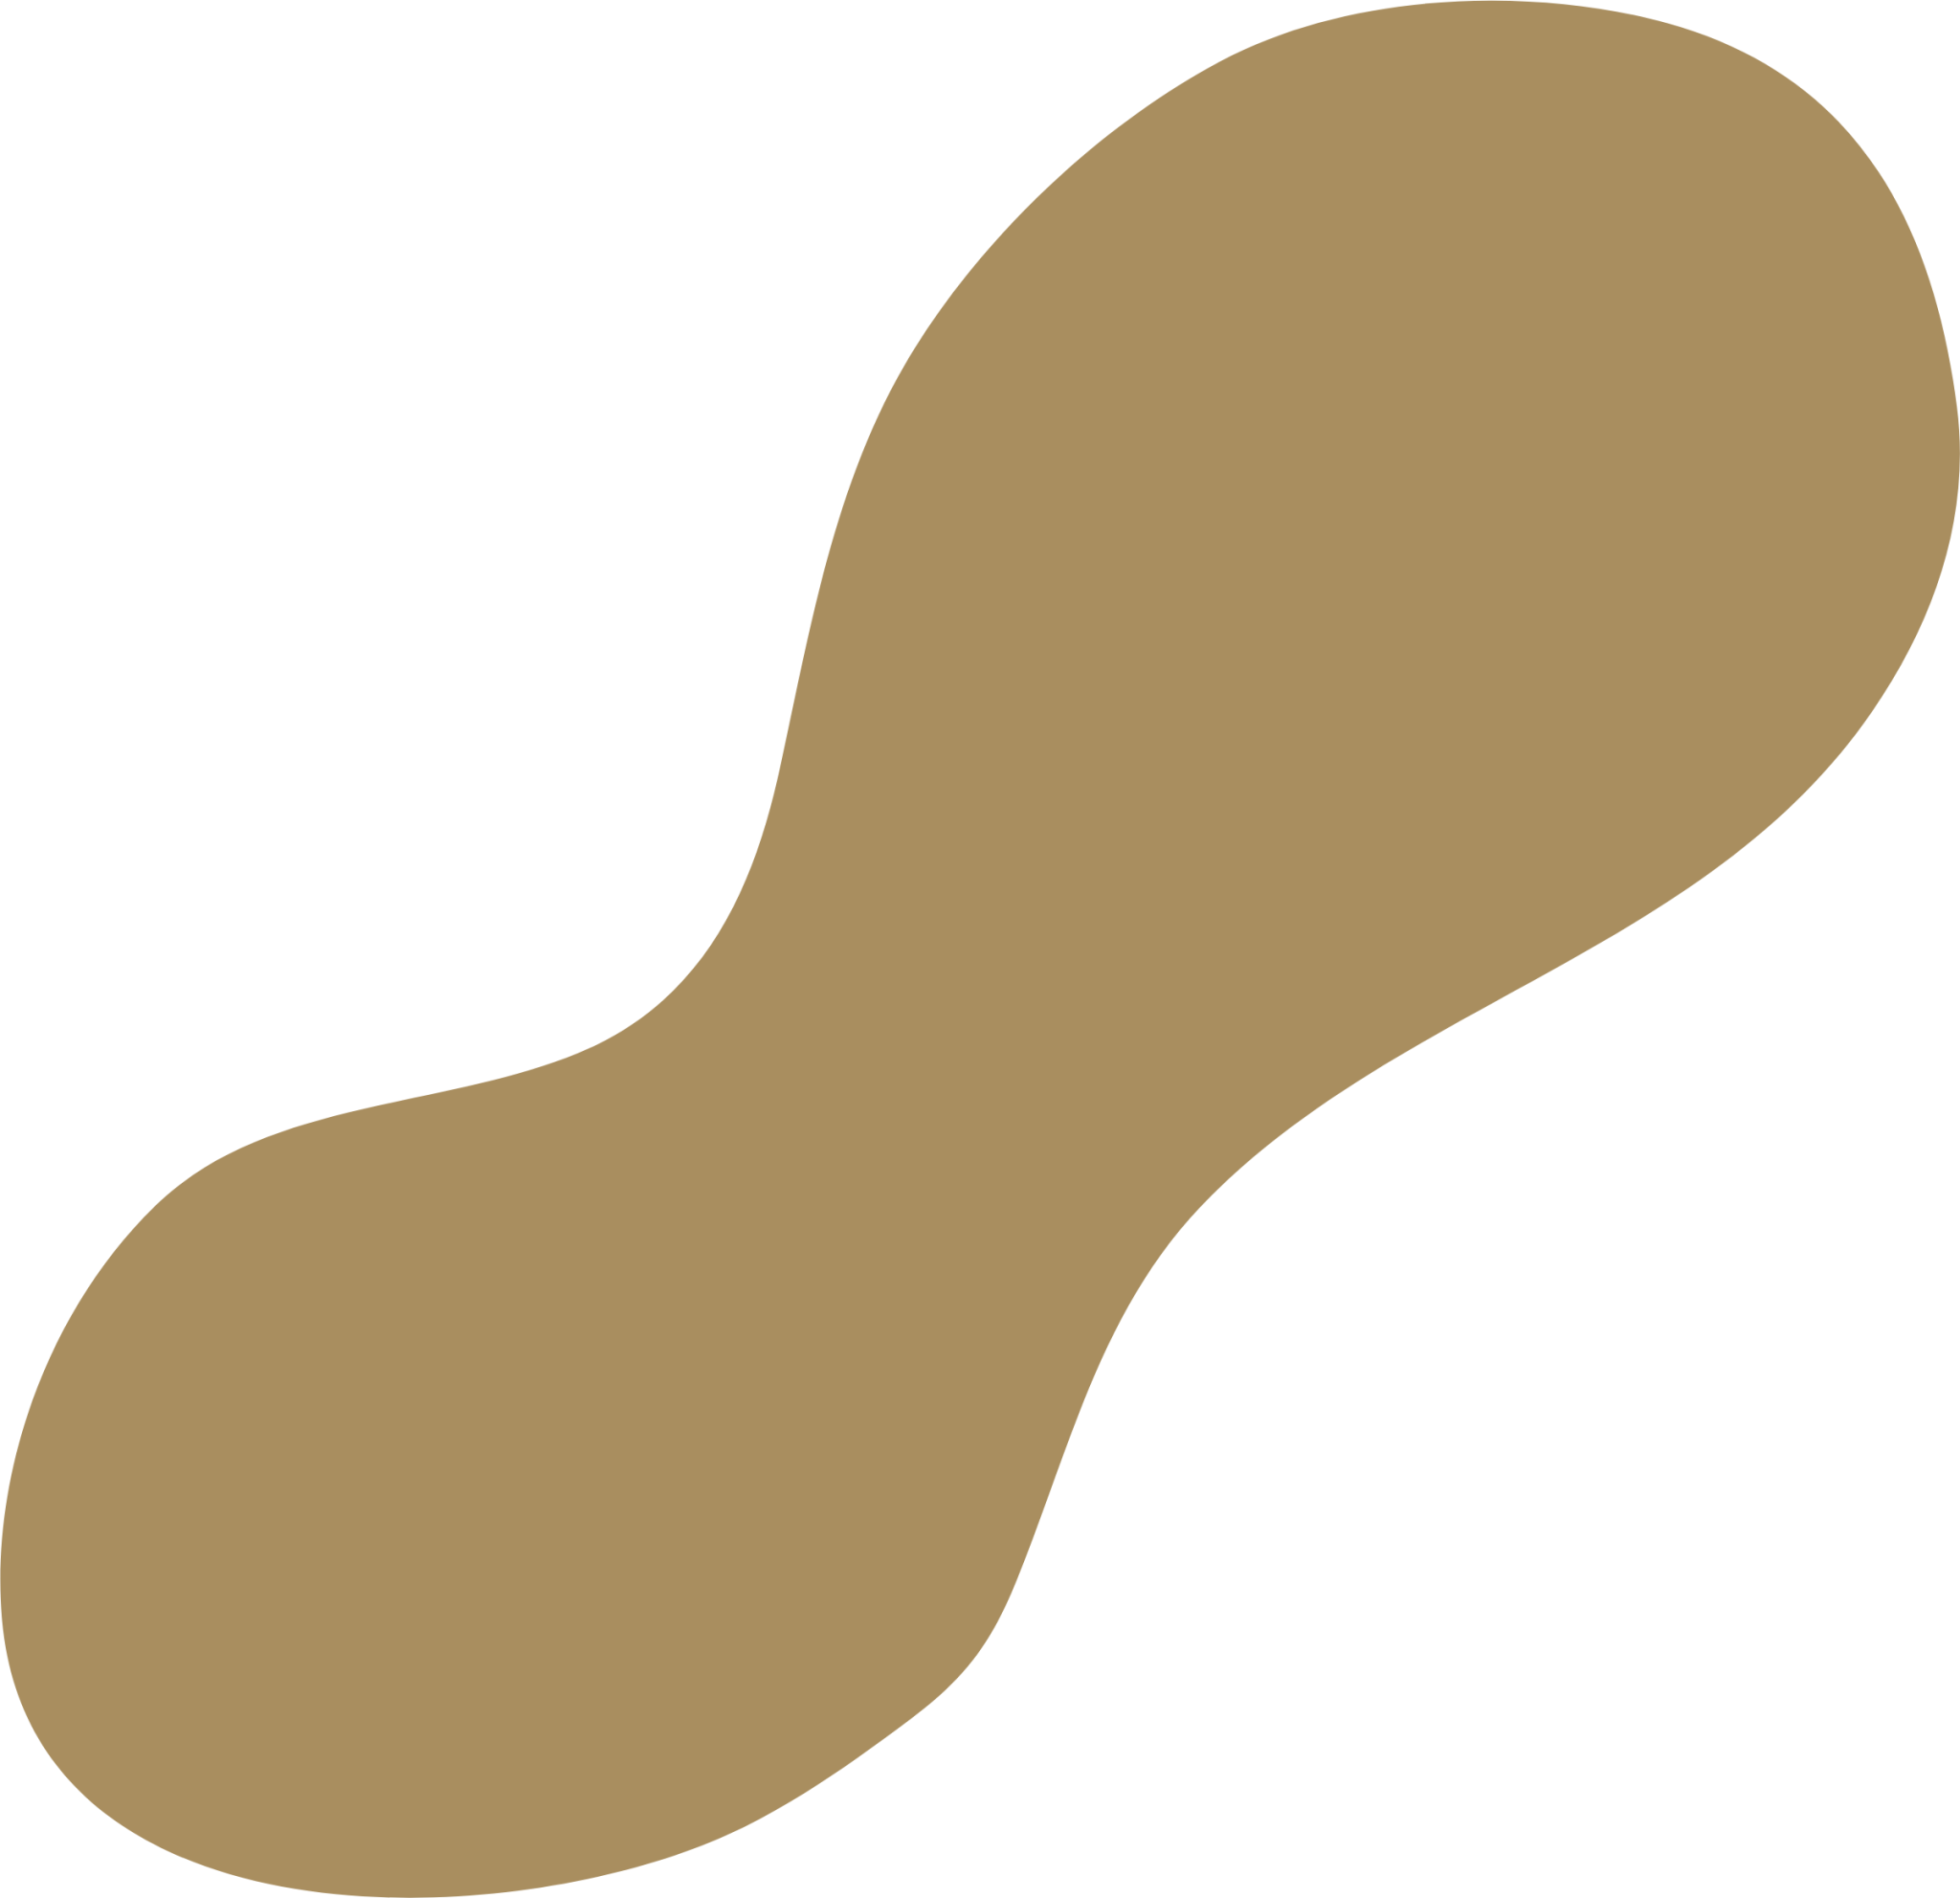 abstract peanut icon